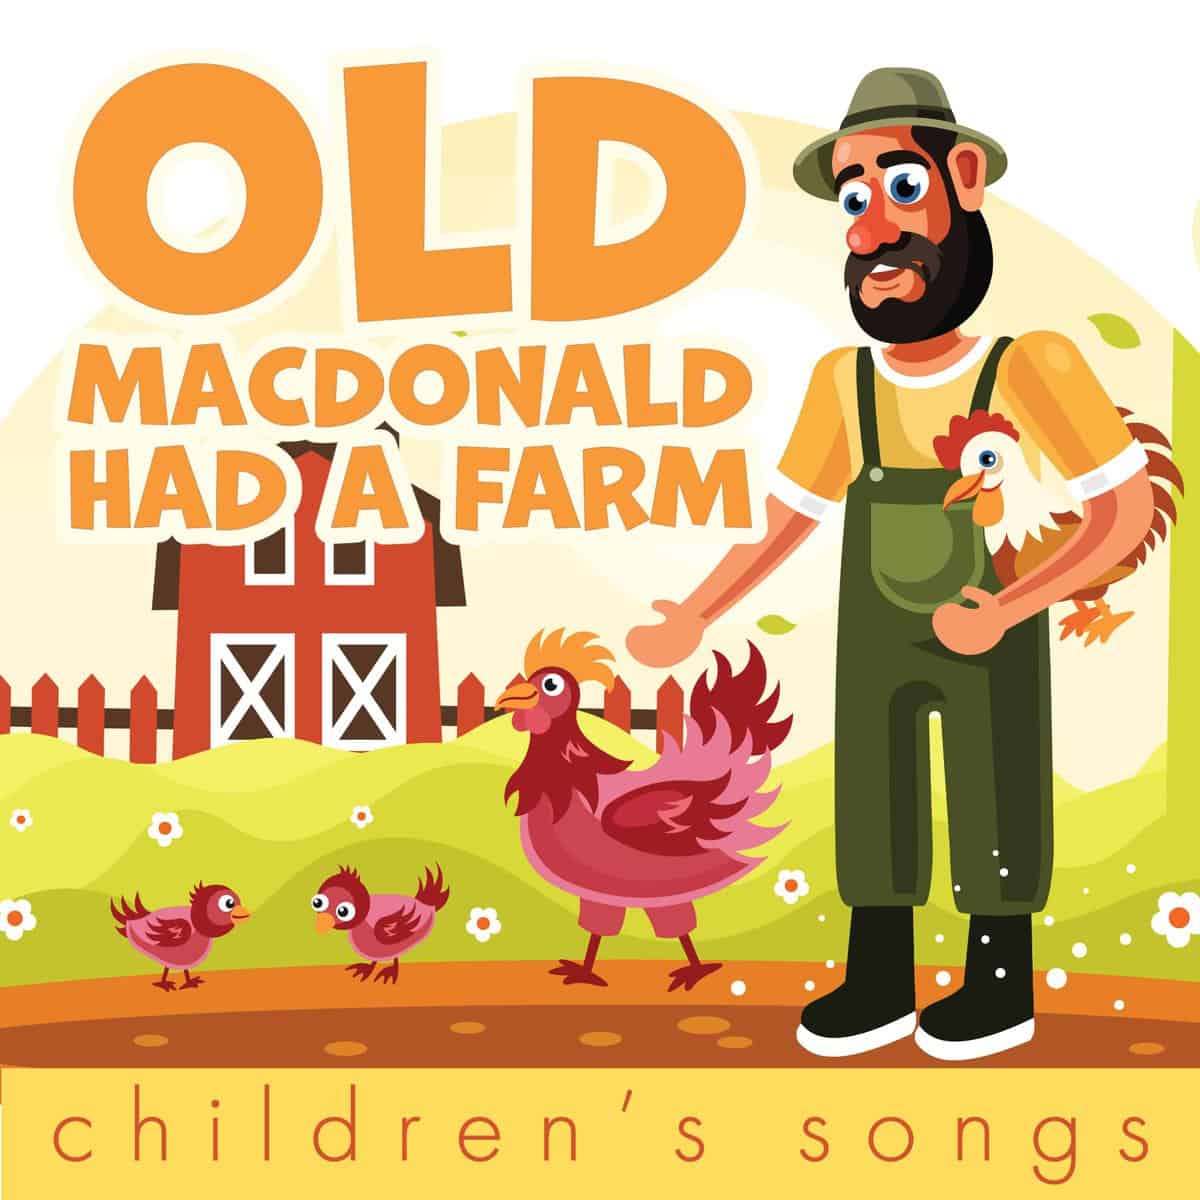 Cover image "Old Macdonald Had a Farm" by Daniel Kim